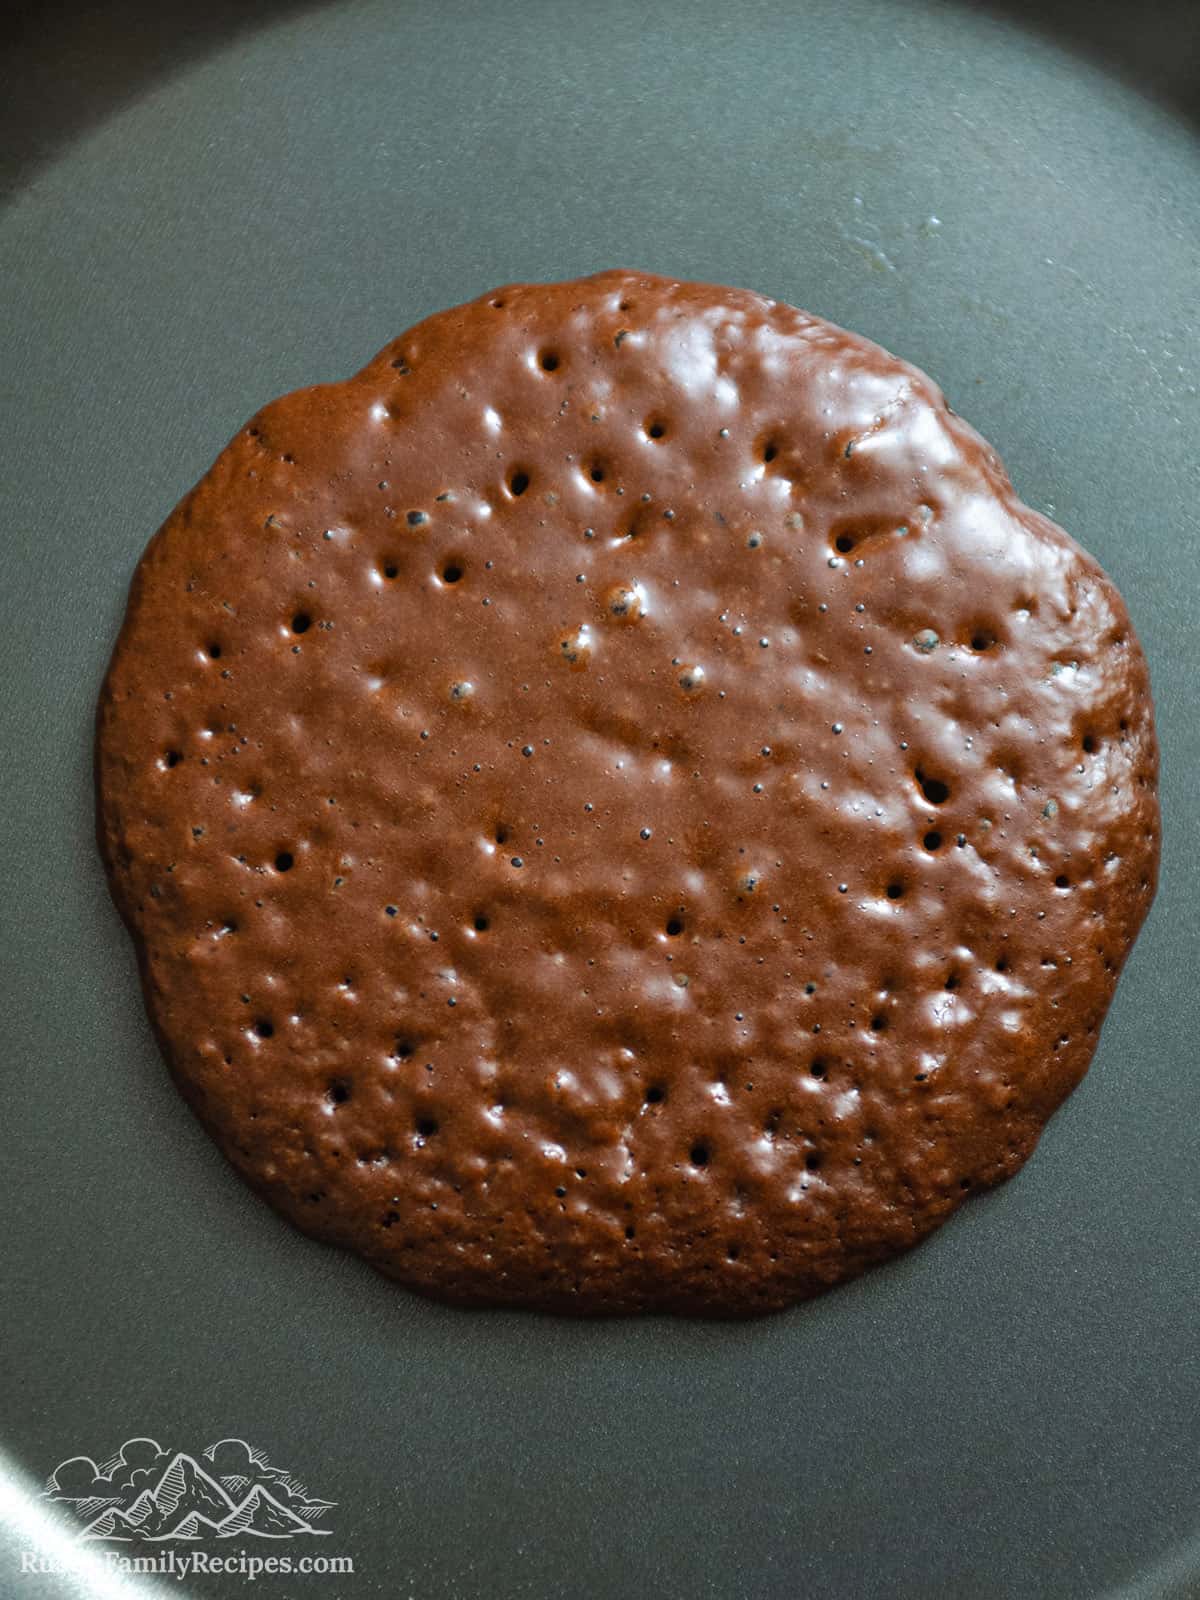 Cooking a chocolate pancake